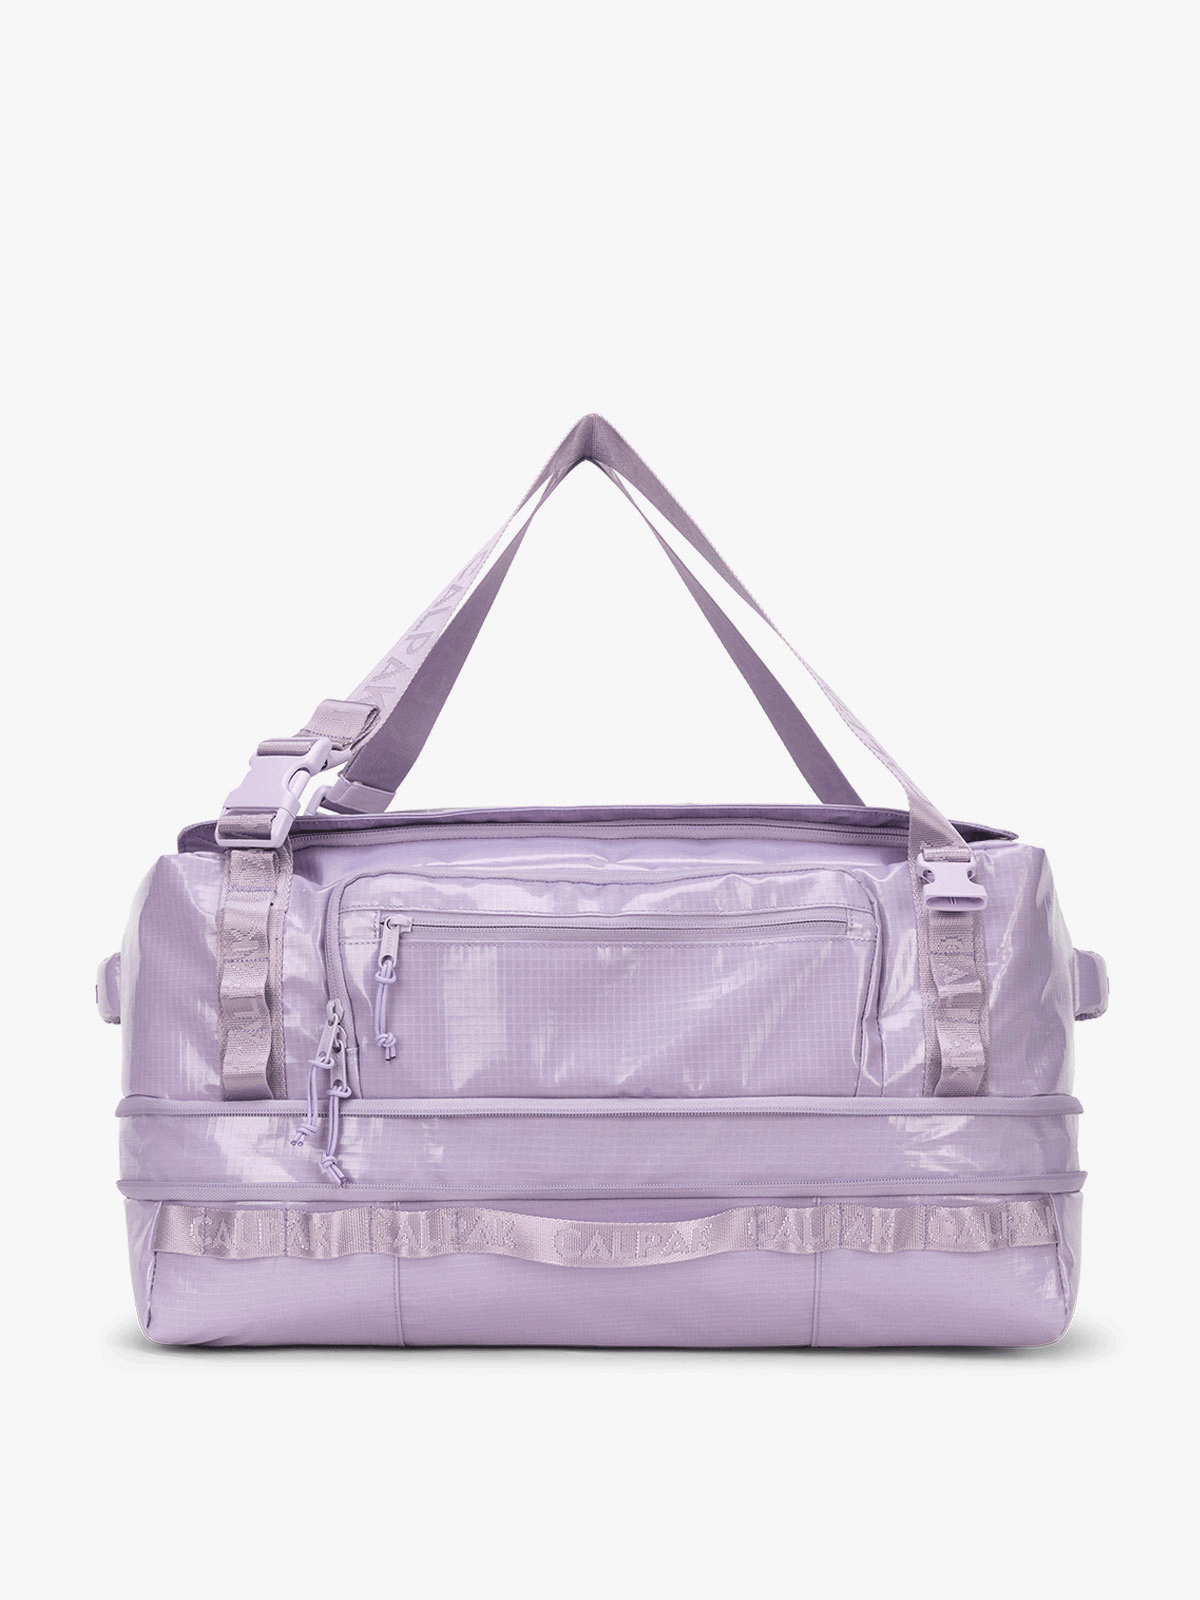 CALPAK Terra Large 50L Duffel Backpack expandable up to 2" in purple amethyst; DTL2301-AMETHYST